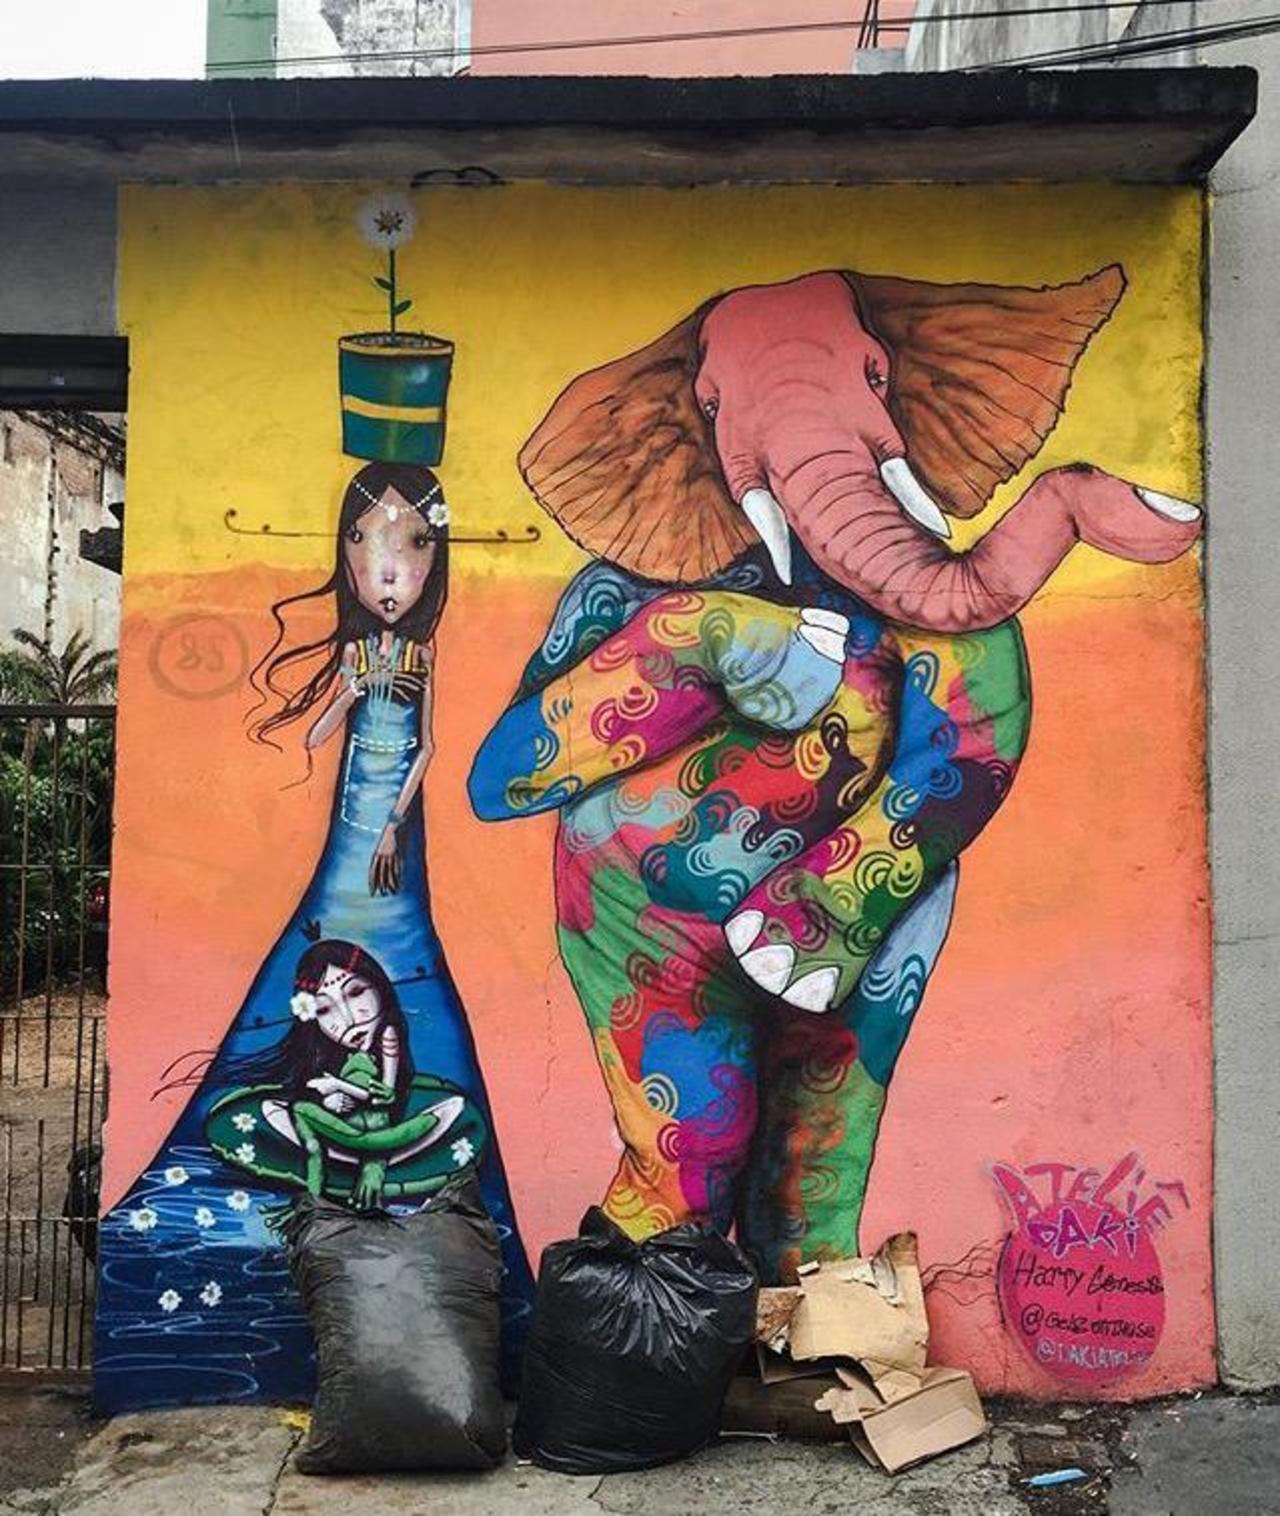 Street Art by Harry Geneis & Gelson in São Paulo 

#art #mural #graffiti #streetart http://t.co/IBEAOT4EyI